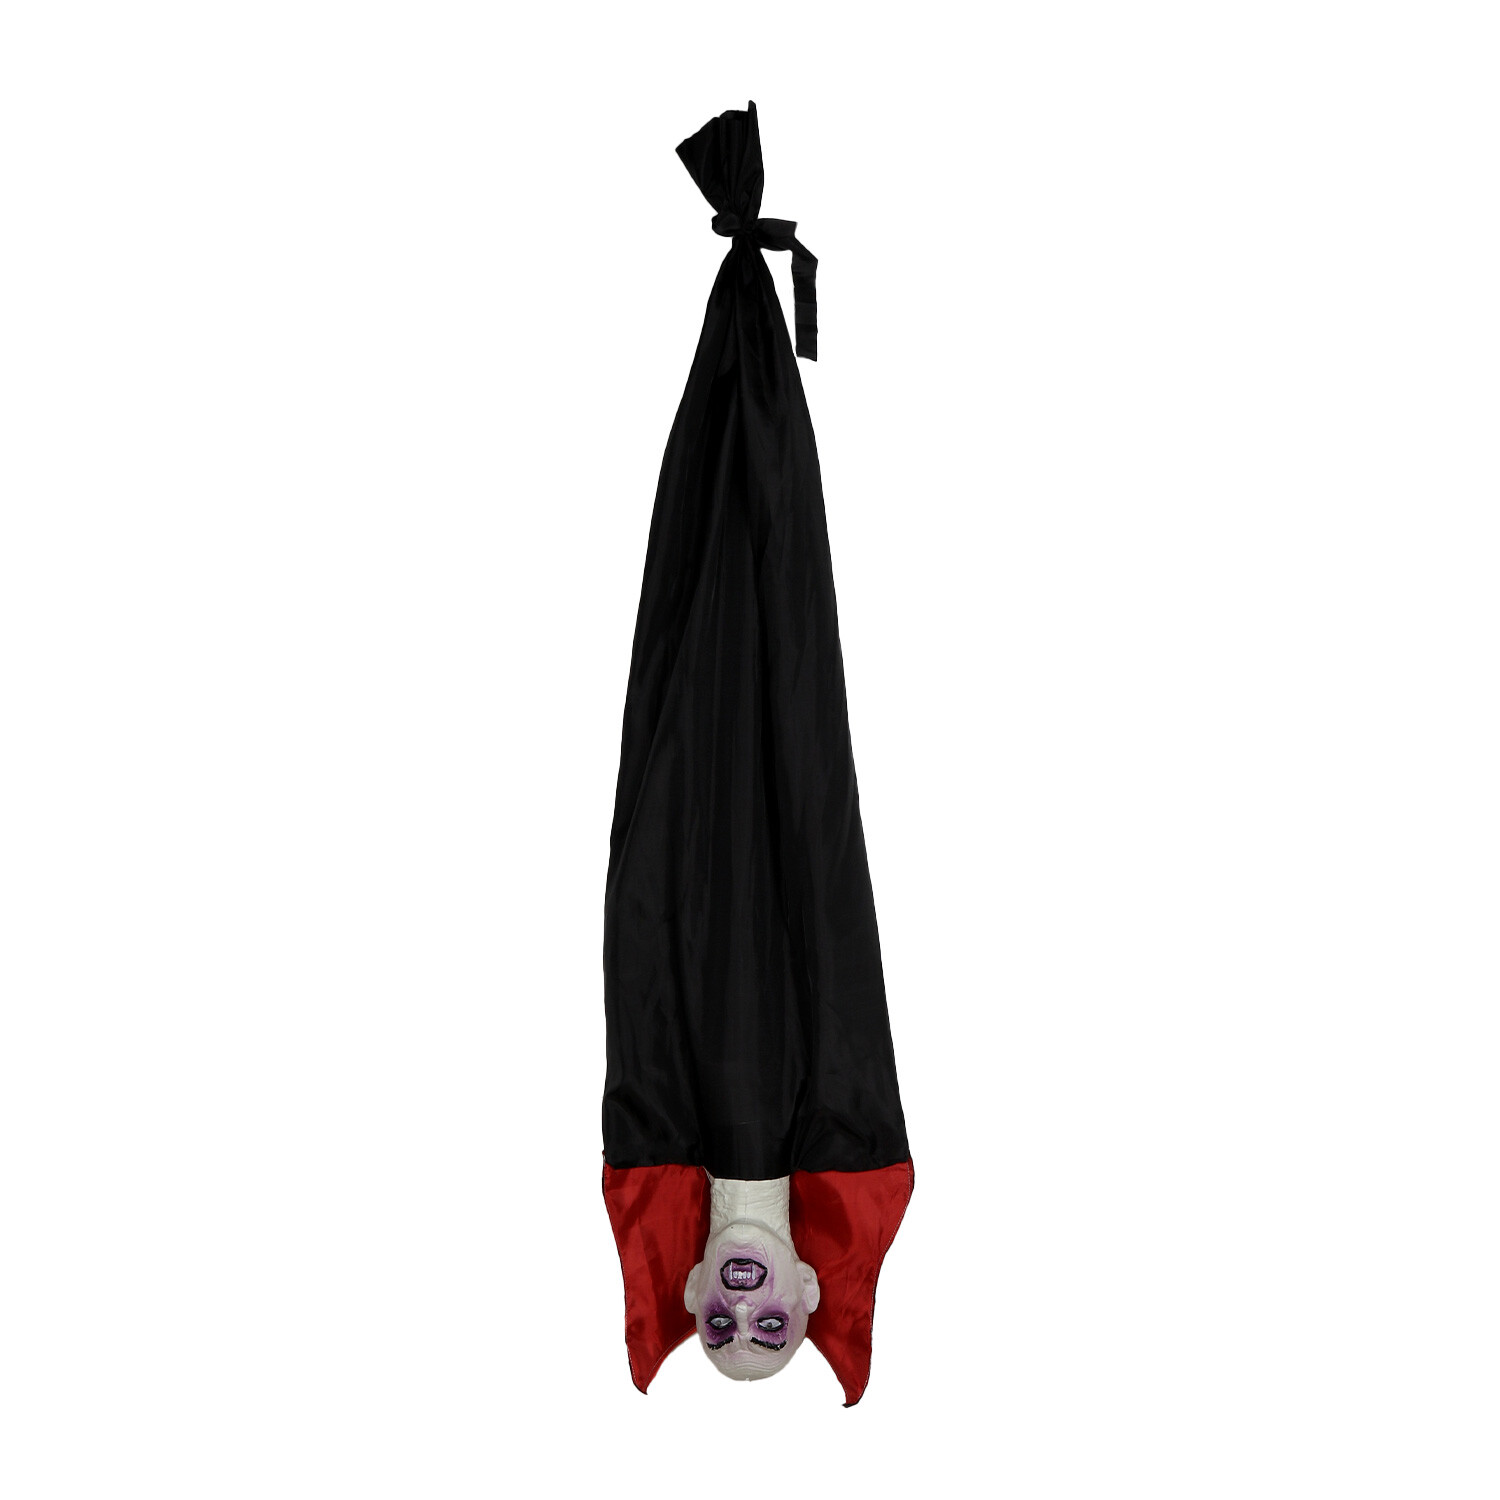 Animated Hanging Vampire - Black Image 2